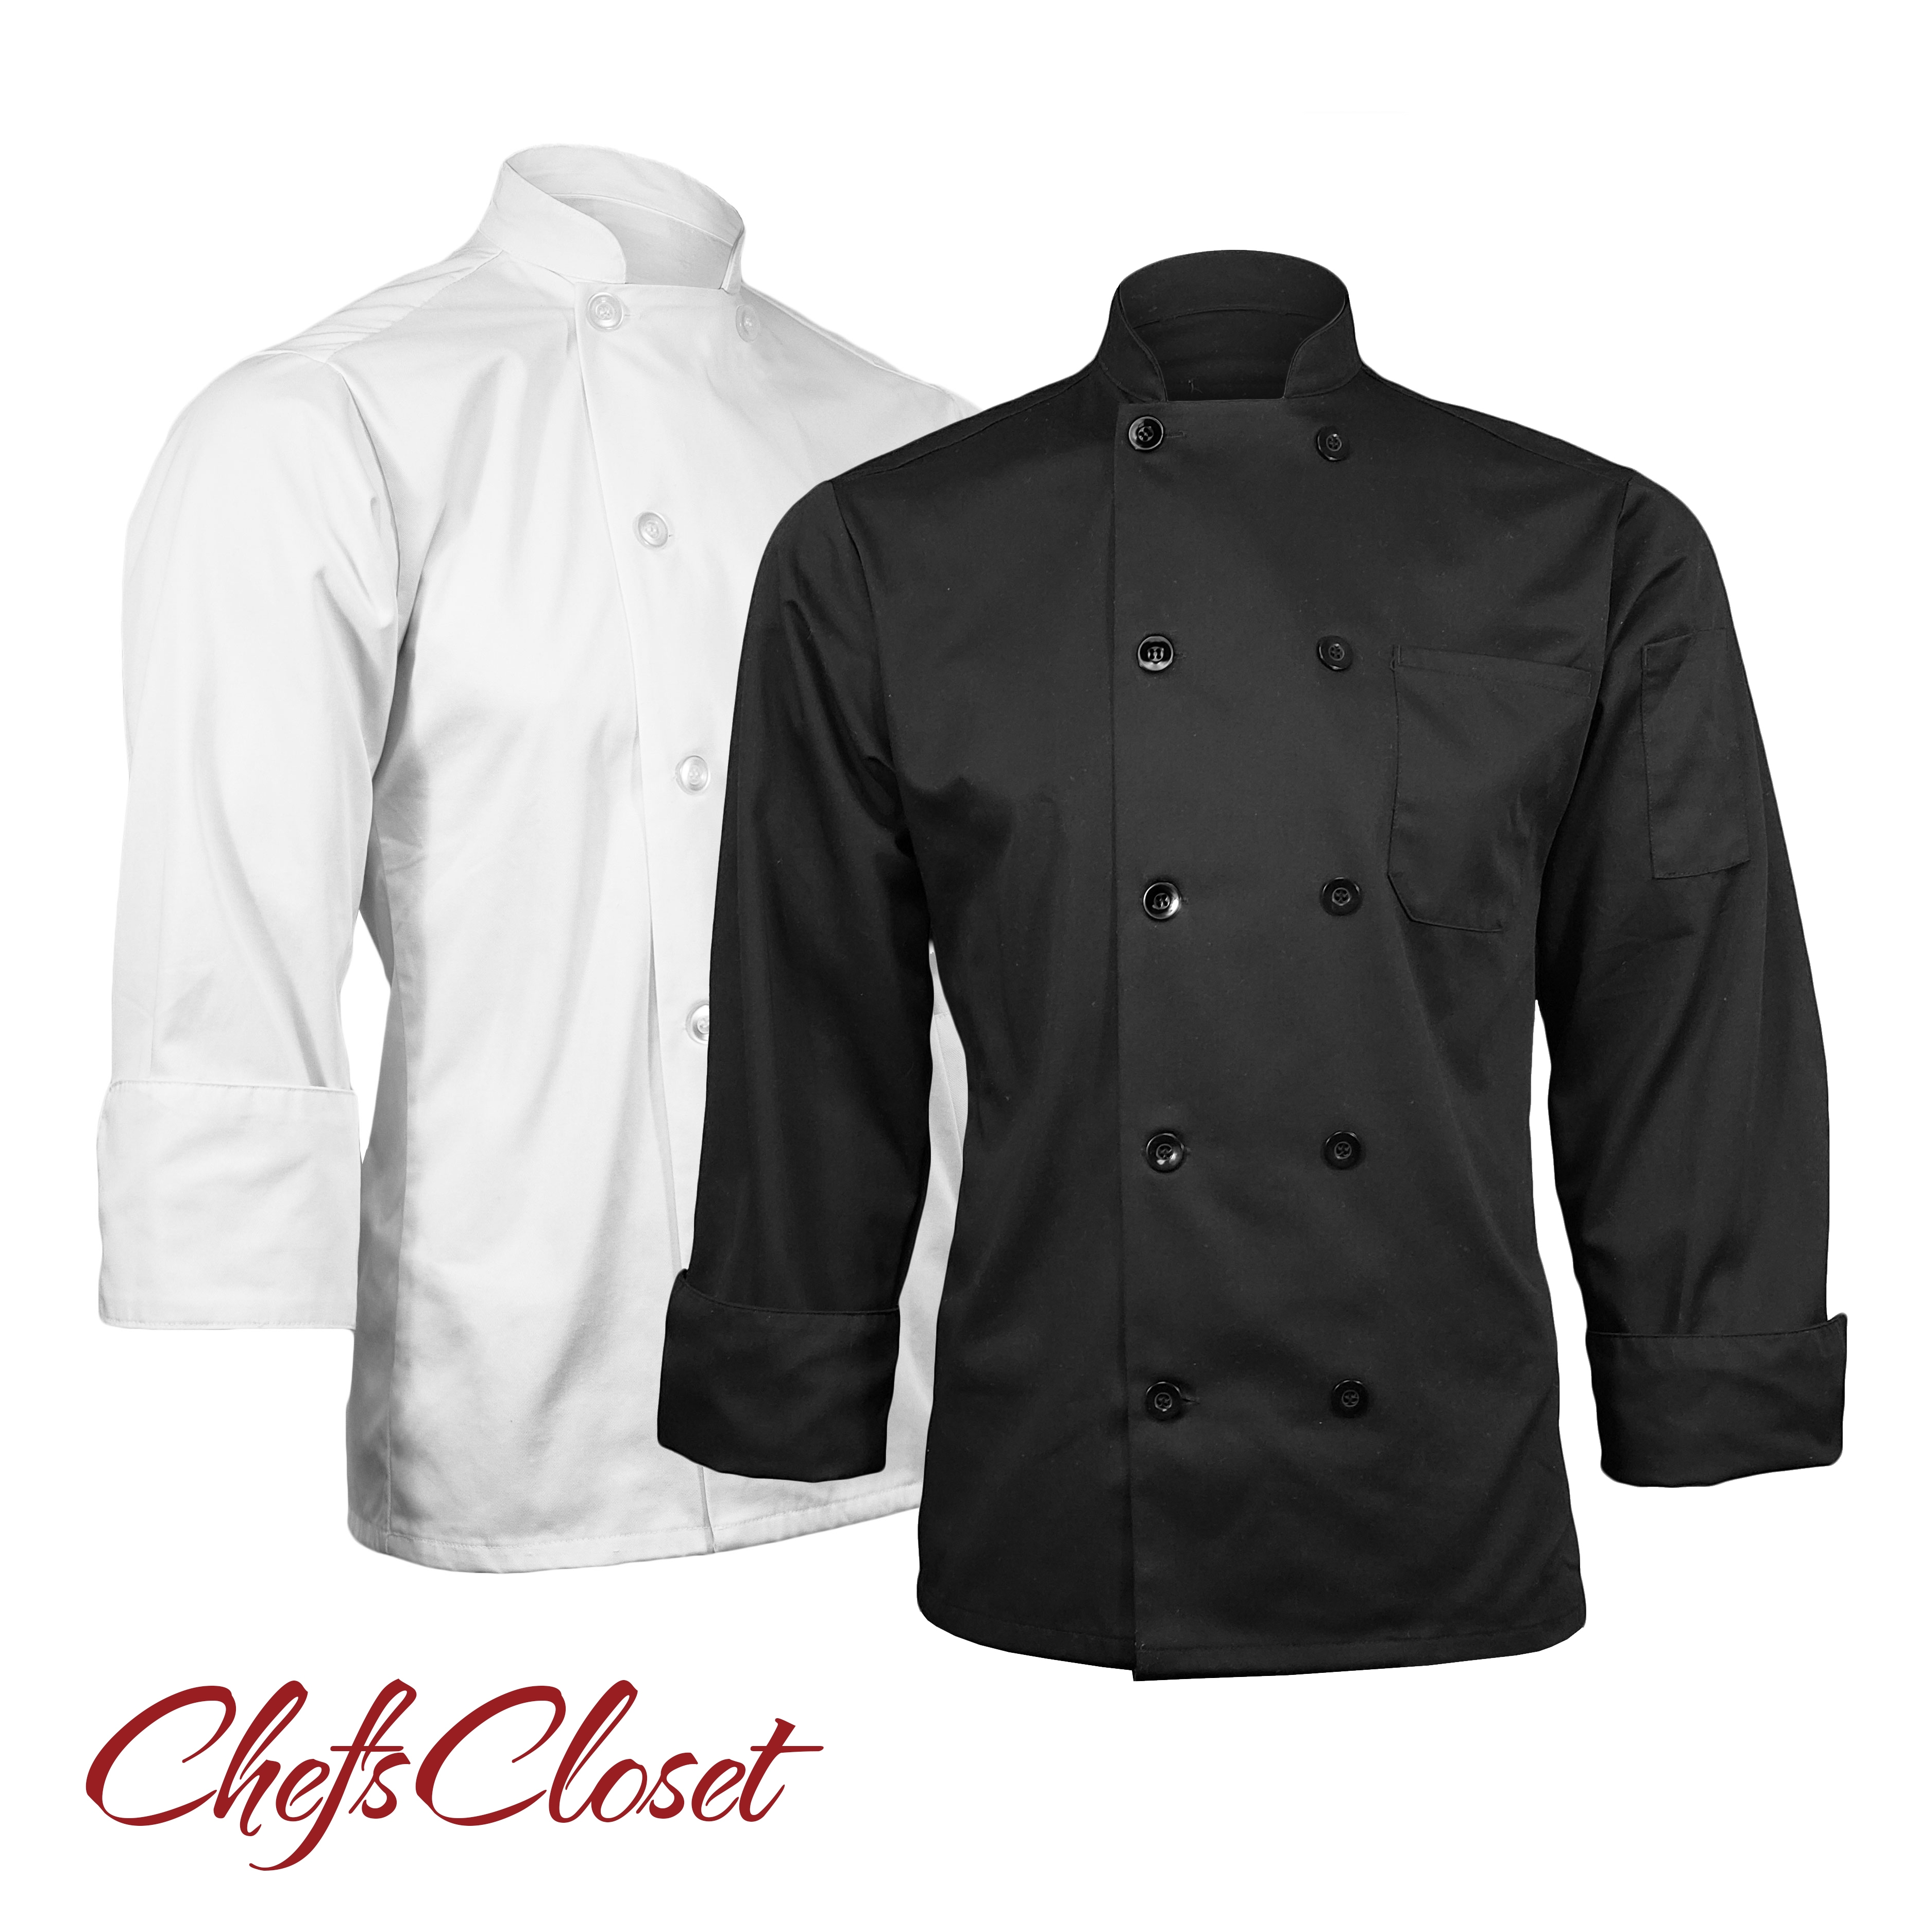 Chef Coat Jacket Uniform Clothes Long Sleeve with Pocket XL 